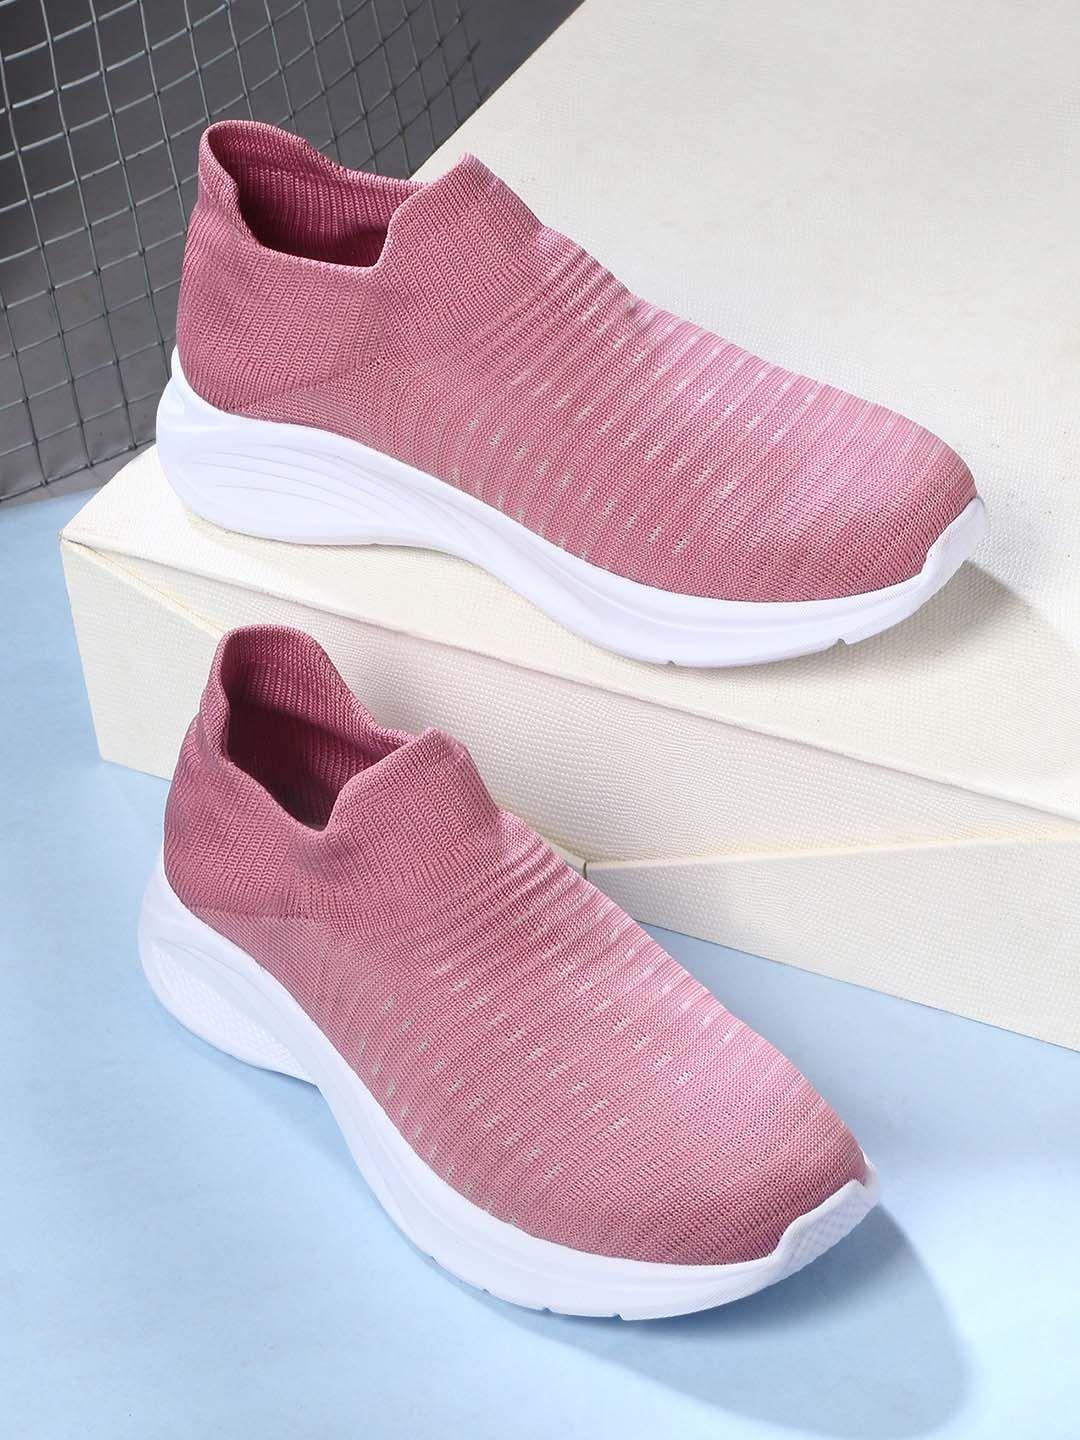 hrx-by-hrithik-roshan-women-pink-textured-3d-flex-slip-on-walking-shoes